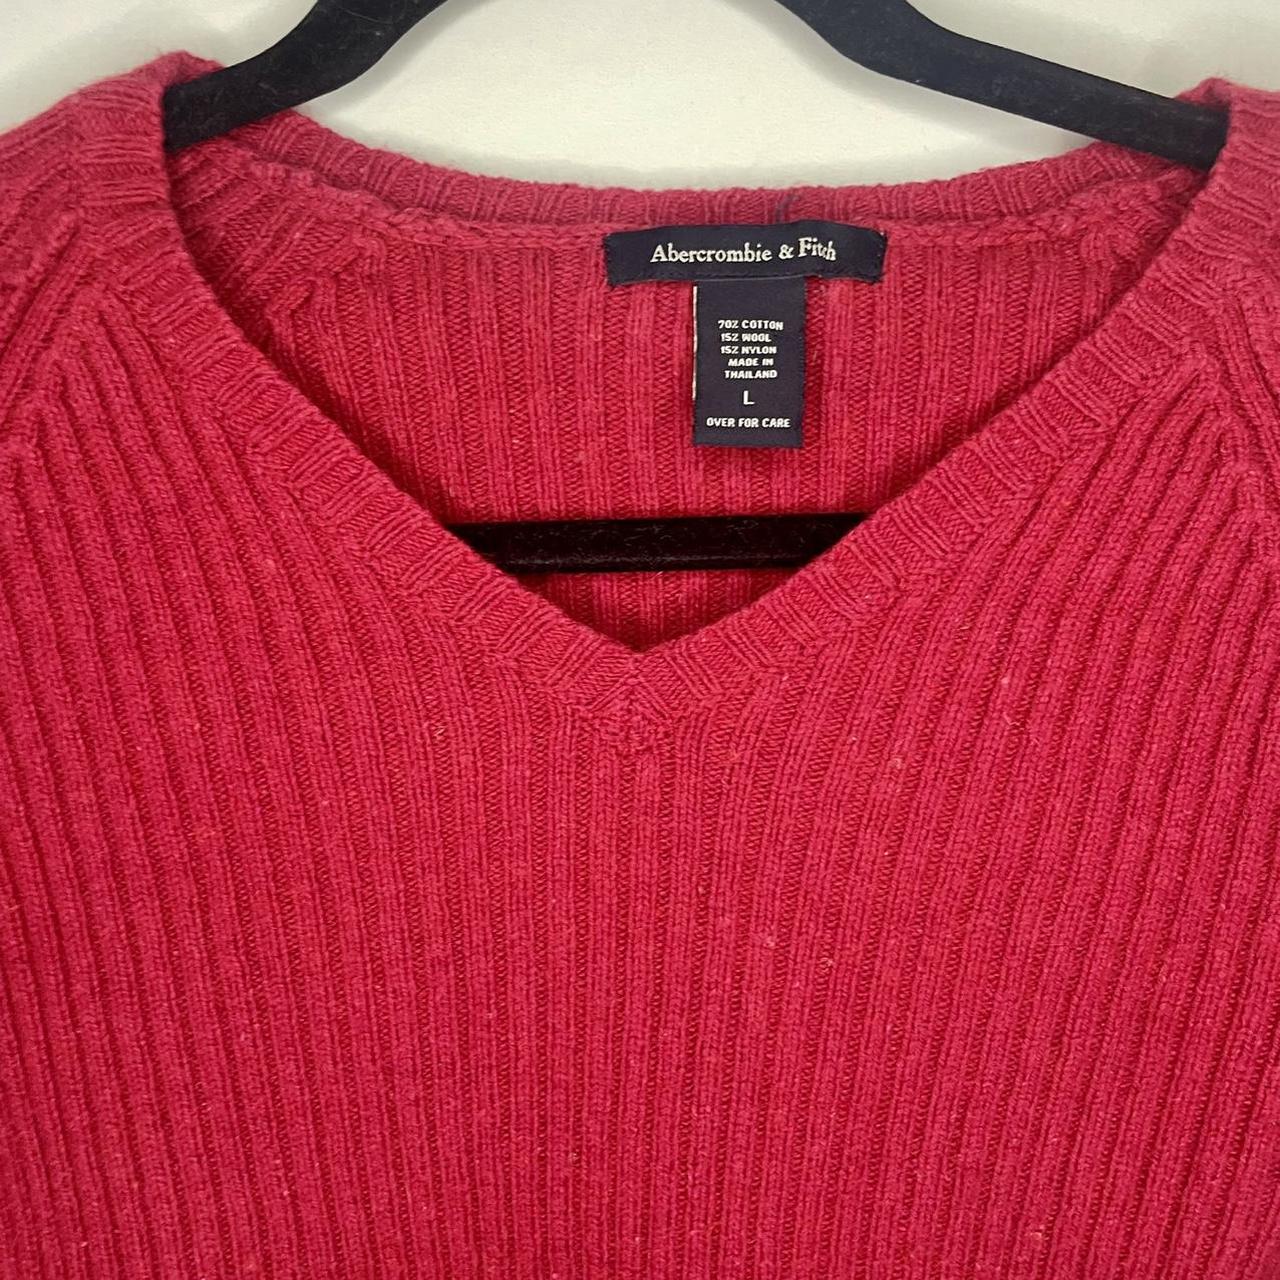 Early 2000s sweater, cotton wool blend, size L,... - Depop